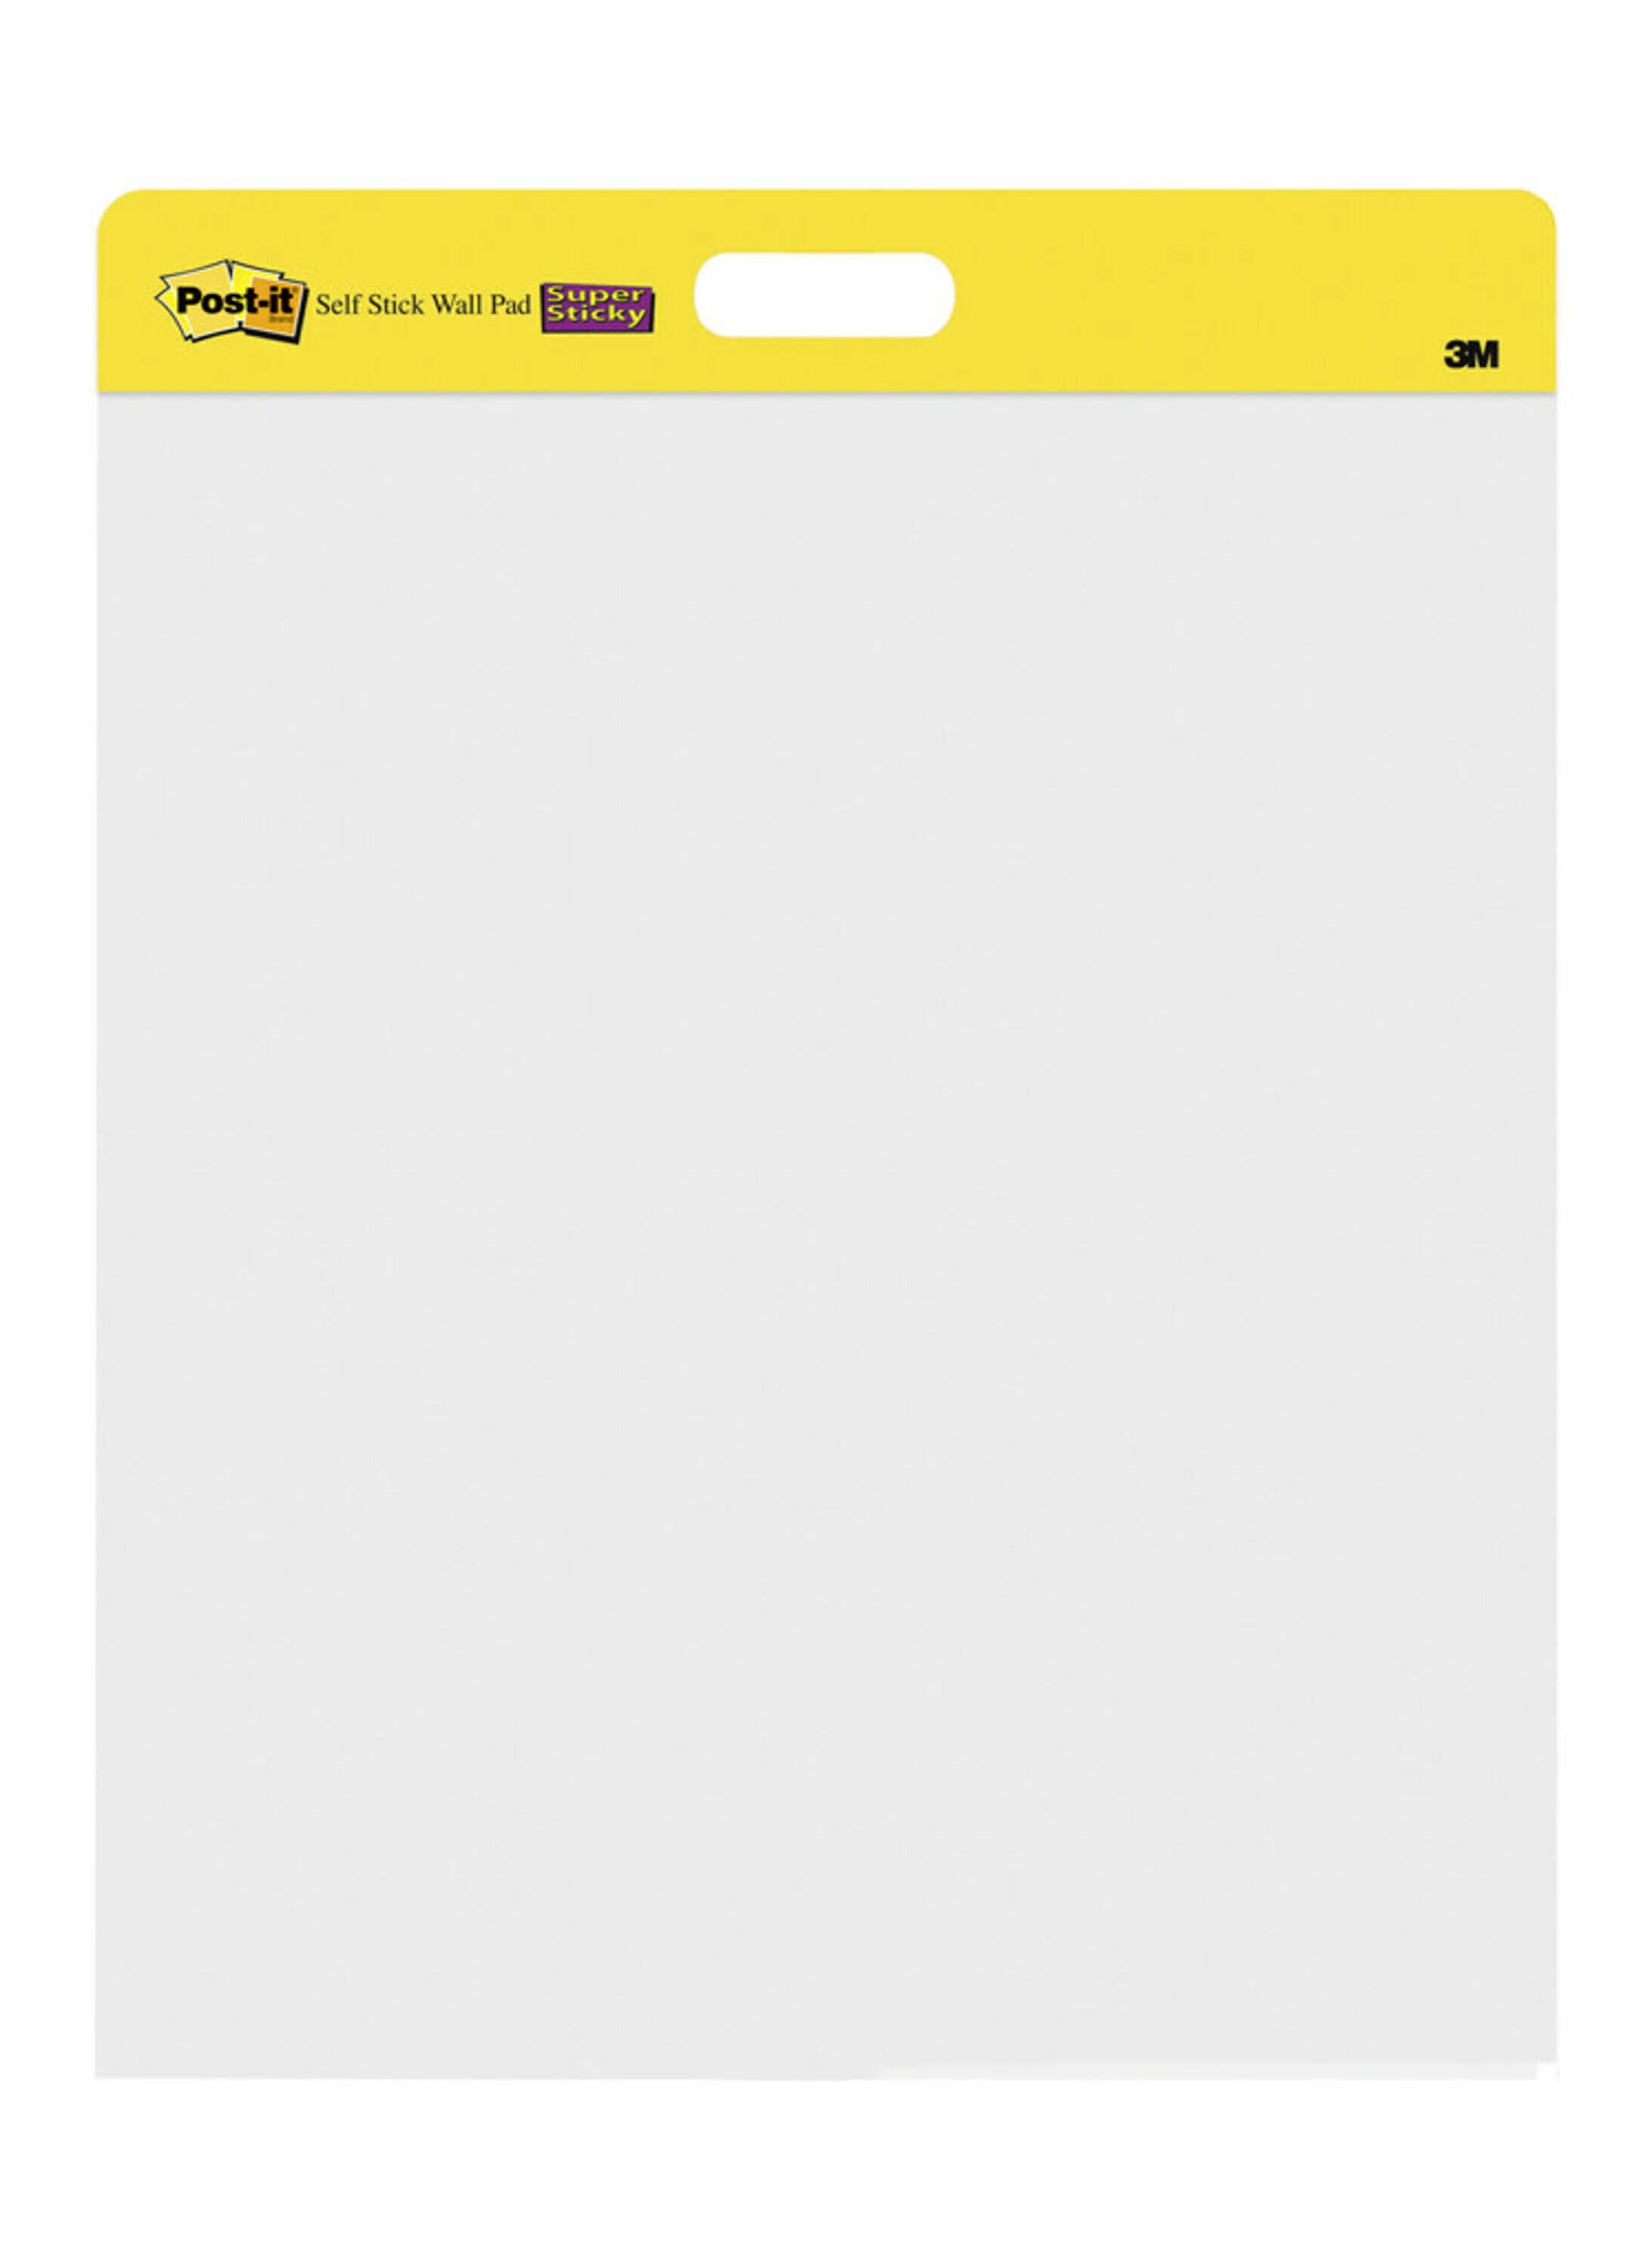 Post-it Wall Pad Easel Pad w/ Bonus Command Strips, 20 x 23, 2 Pads